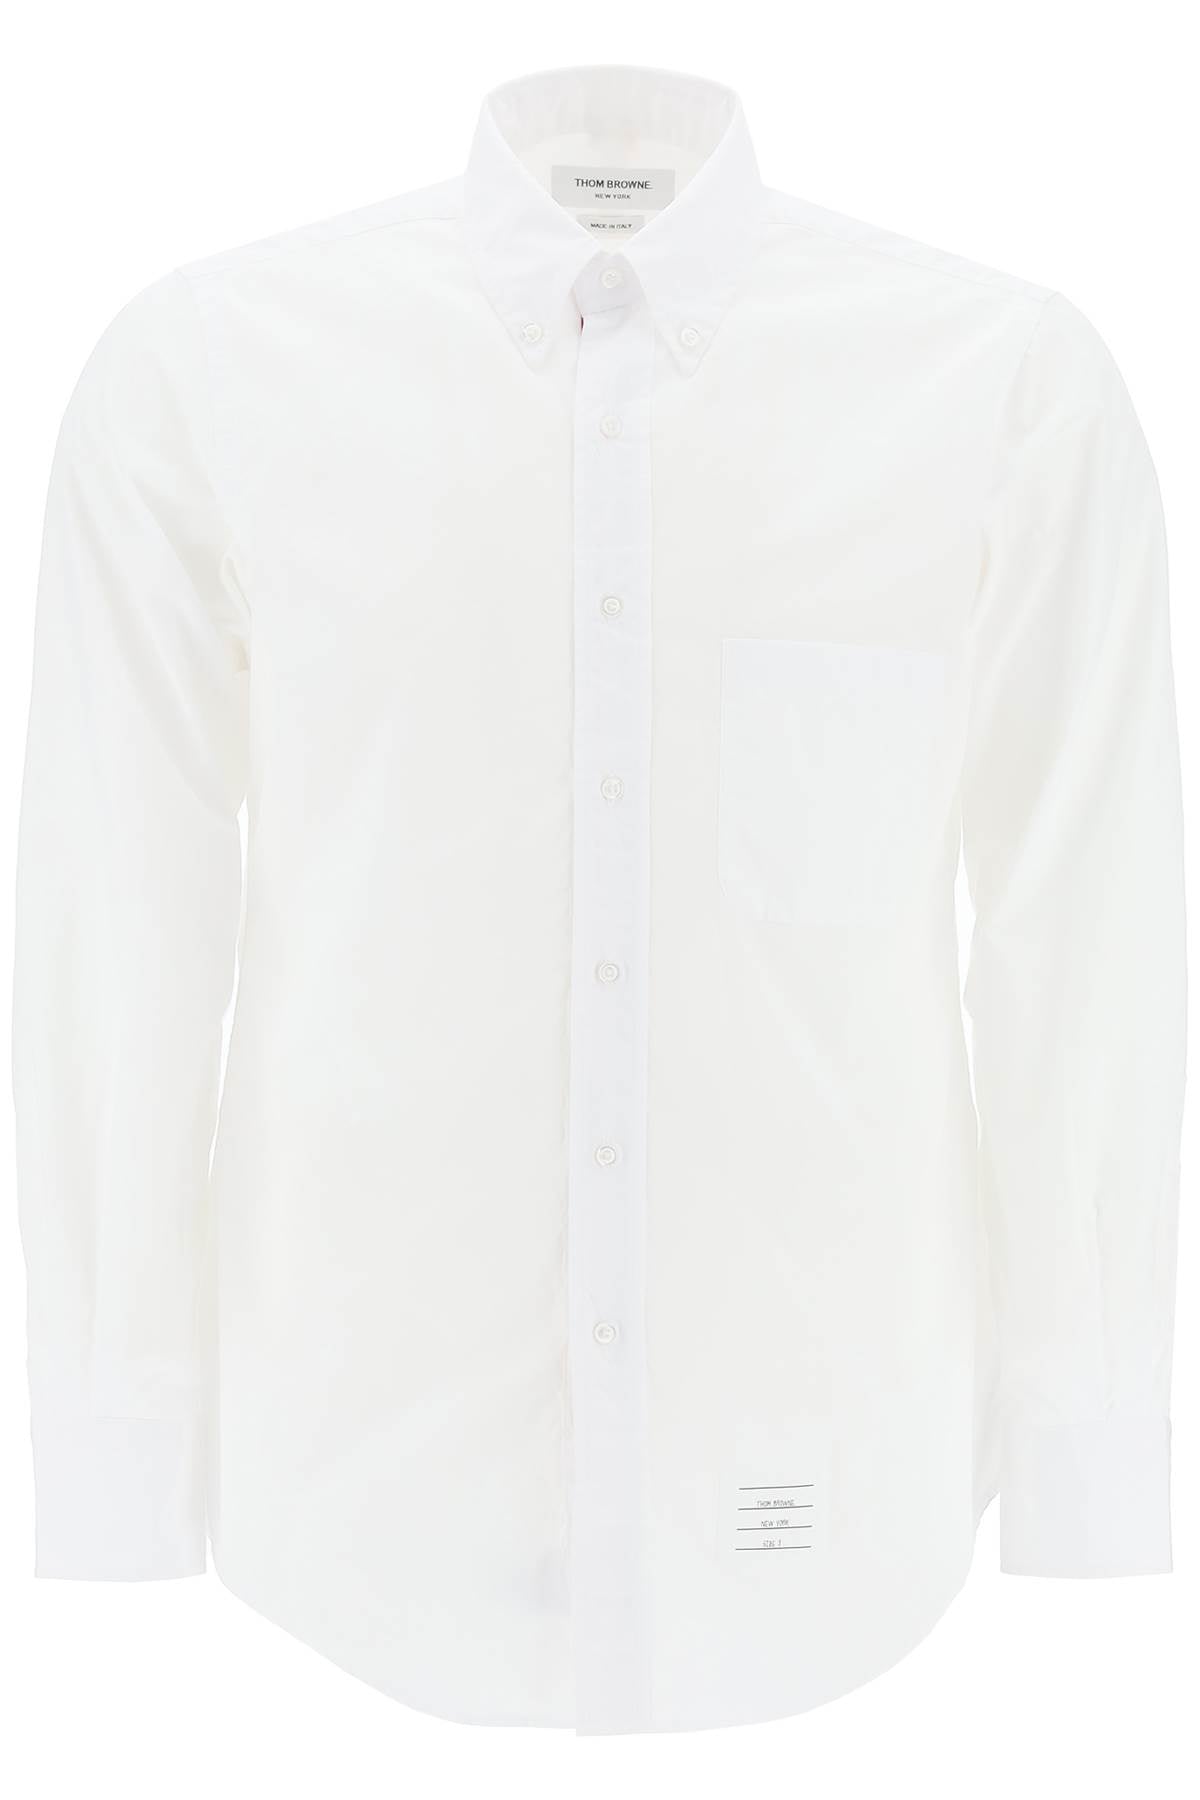 Thom Browne Classic Poplin Shirt   White